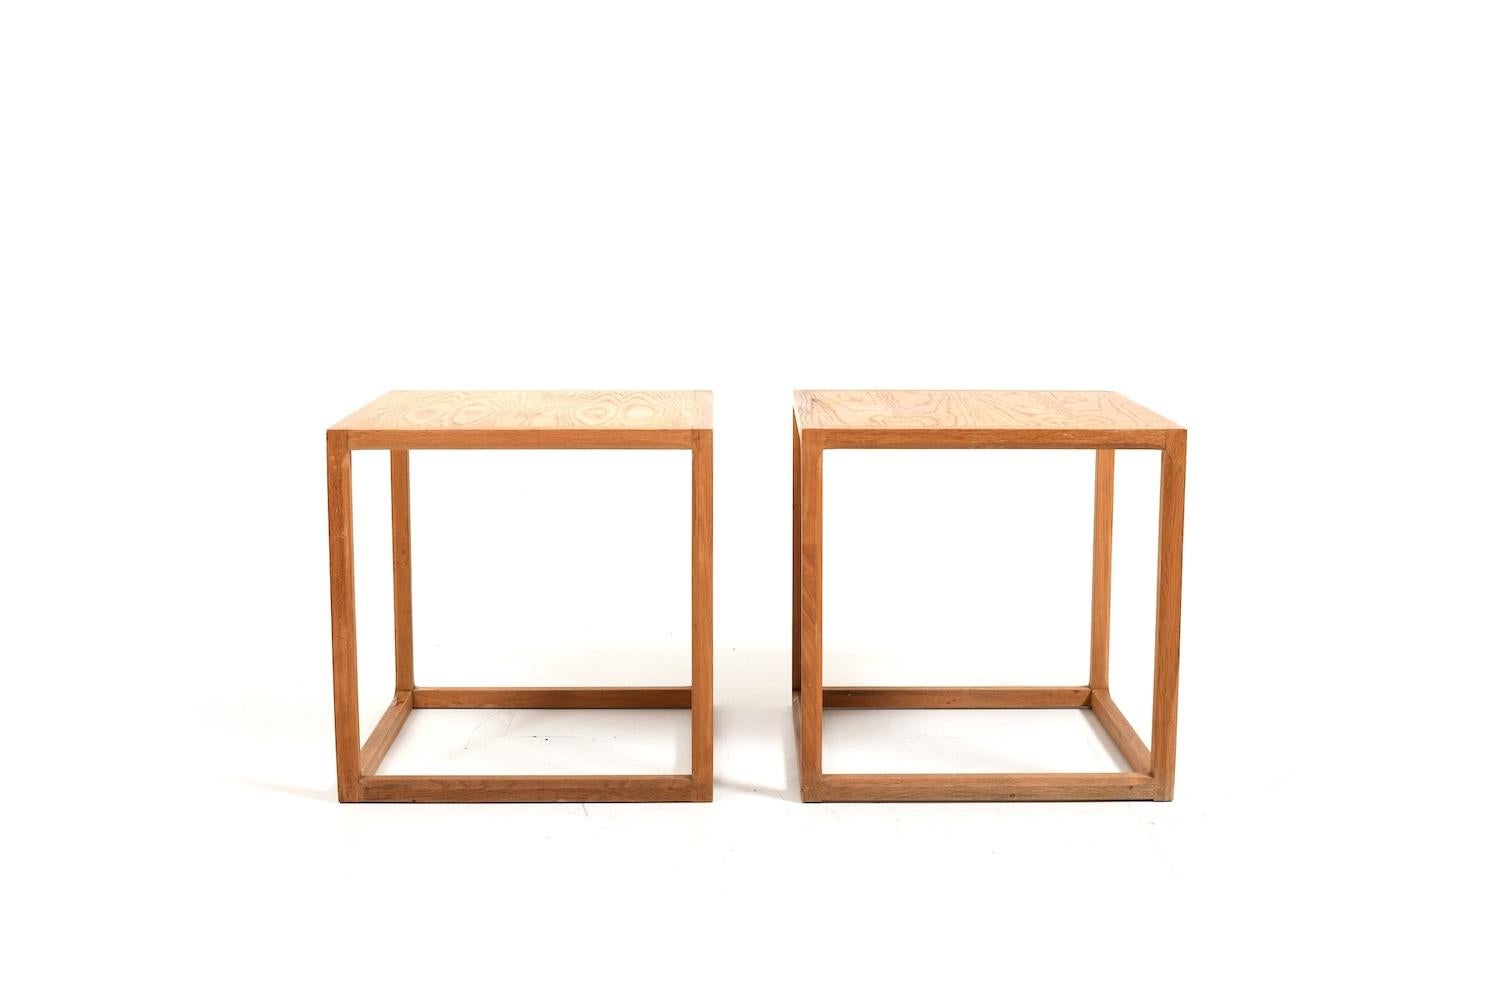 Pair of cube side tables in solid oak by Kai Kristiansen for Aksel Kjersgaard Denmark 1960s. Price for the set.